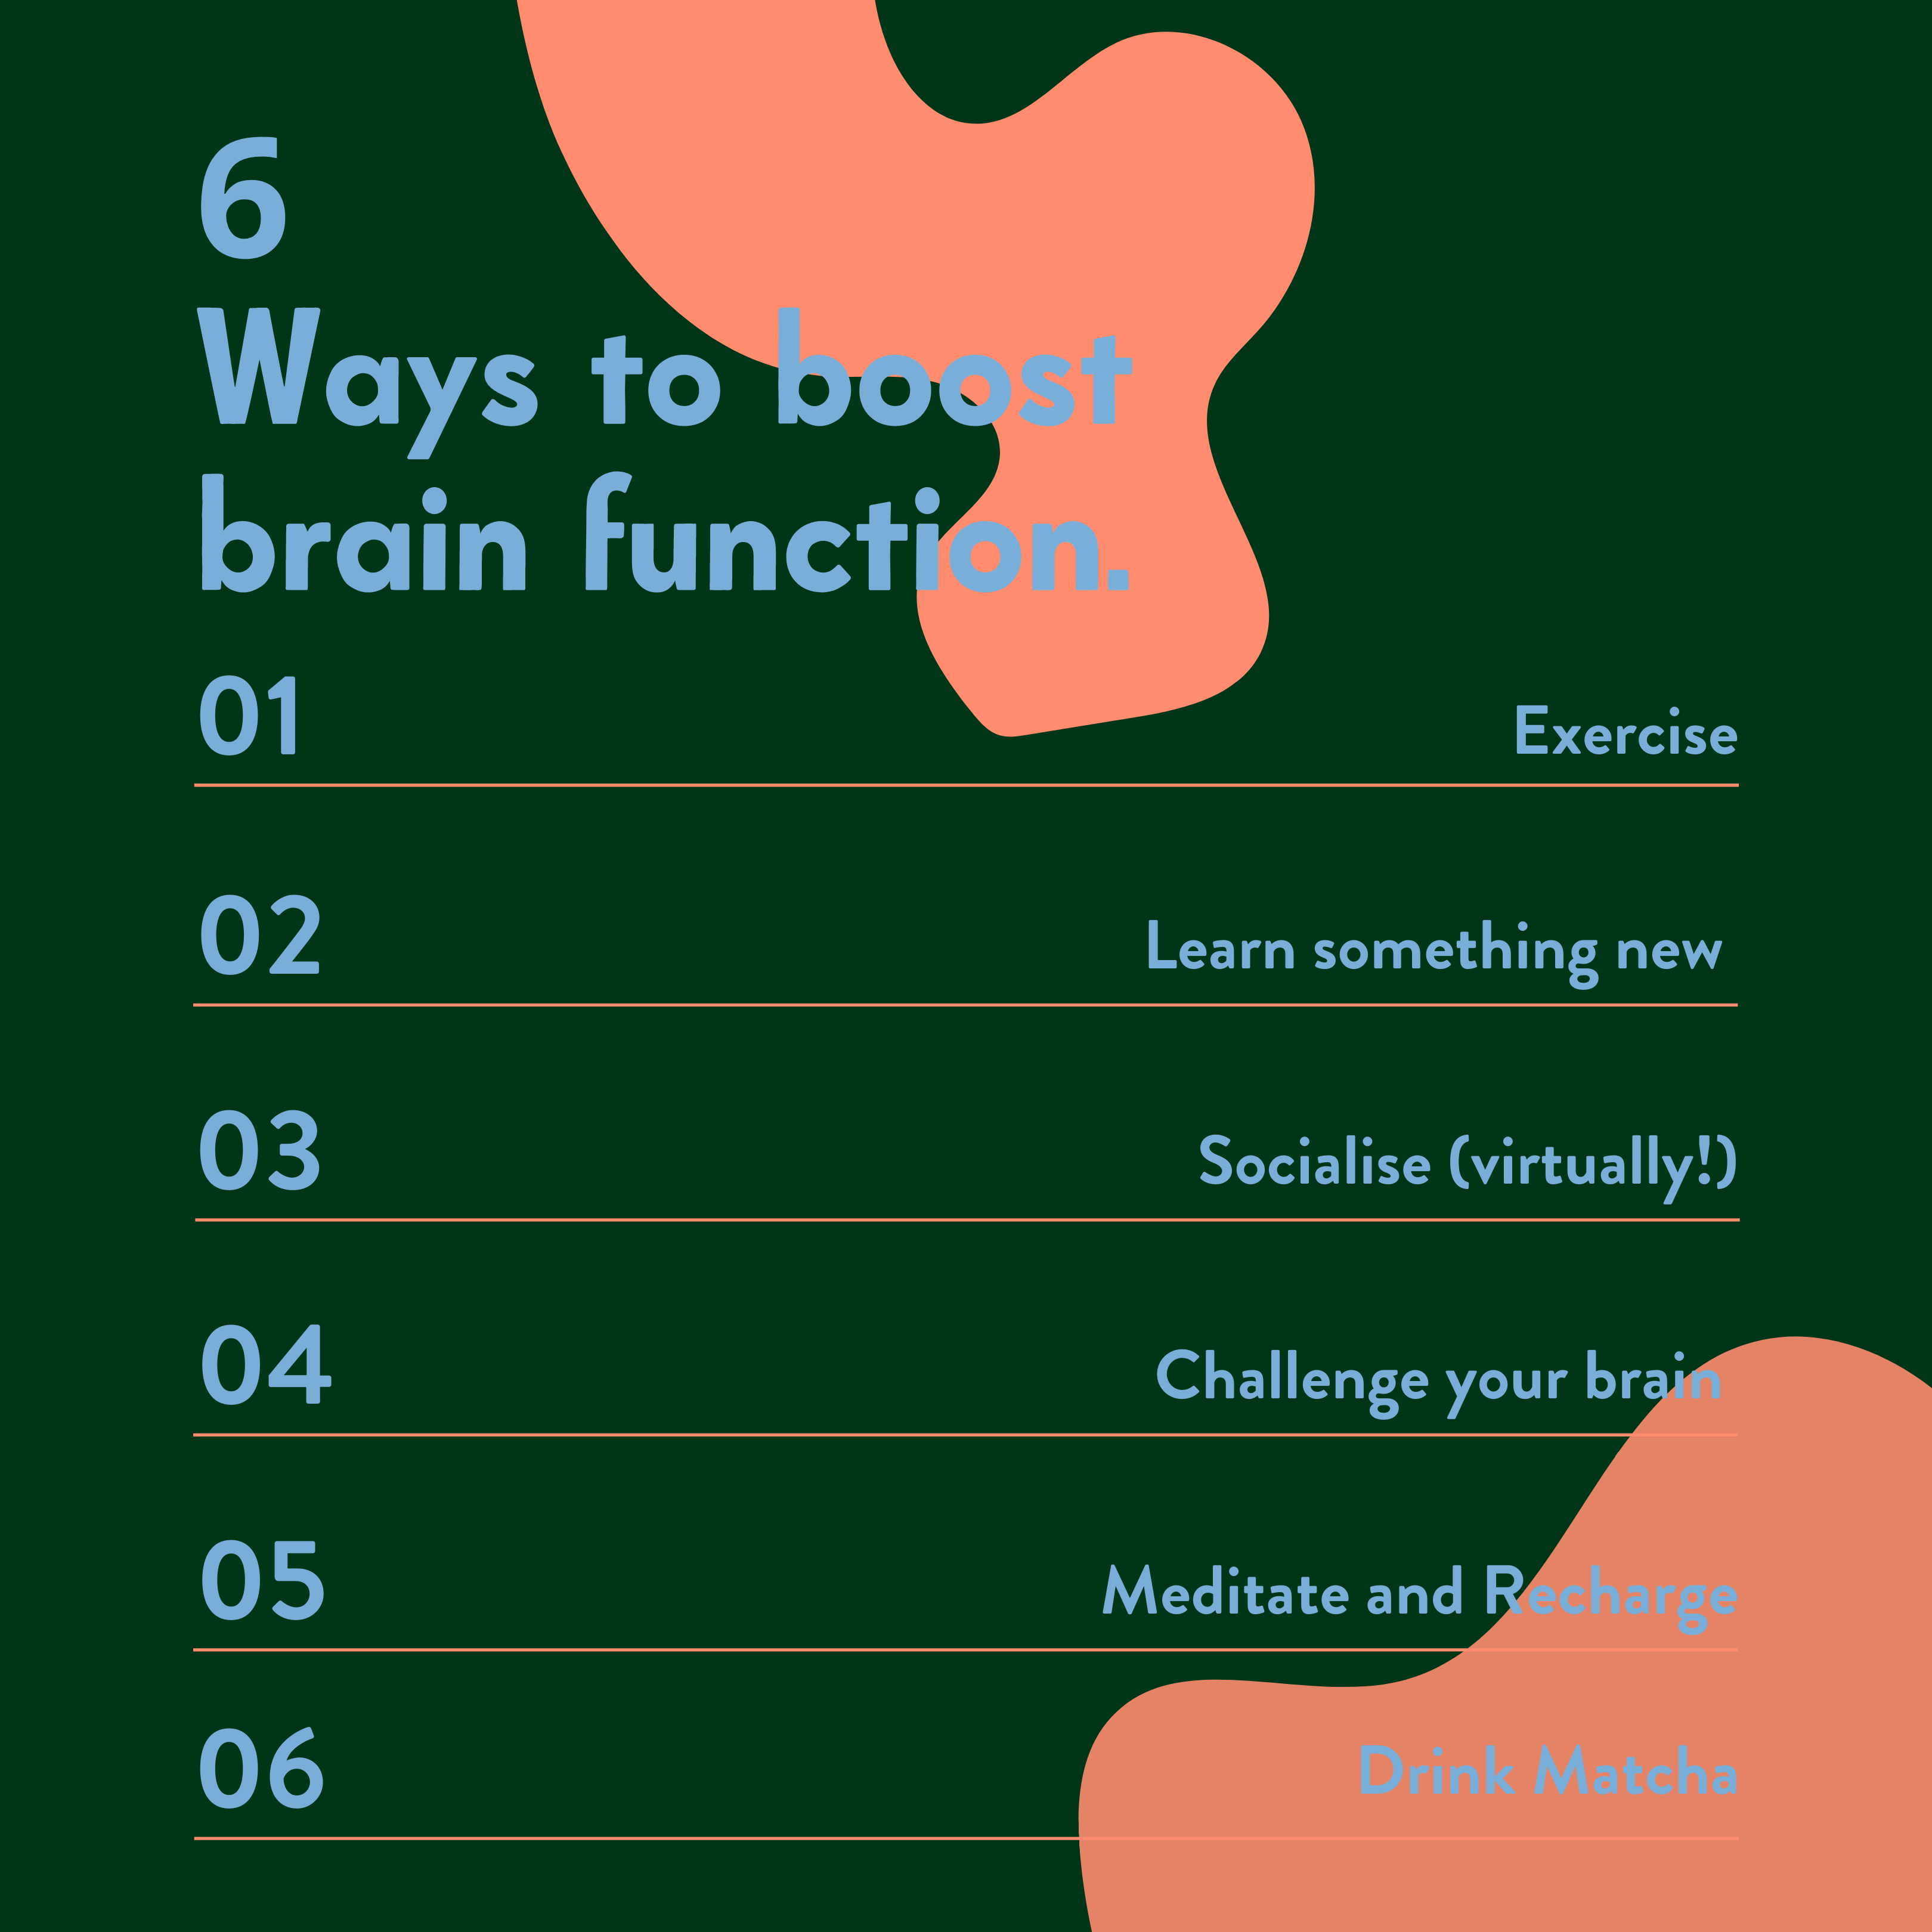 Boosting brain function